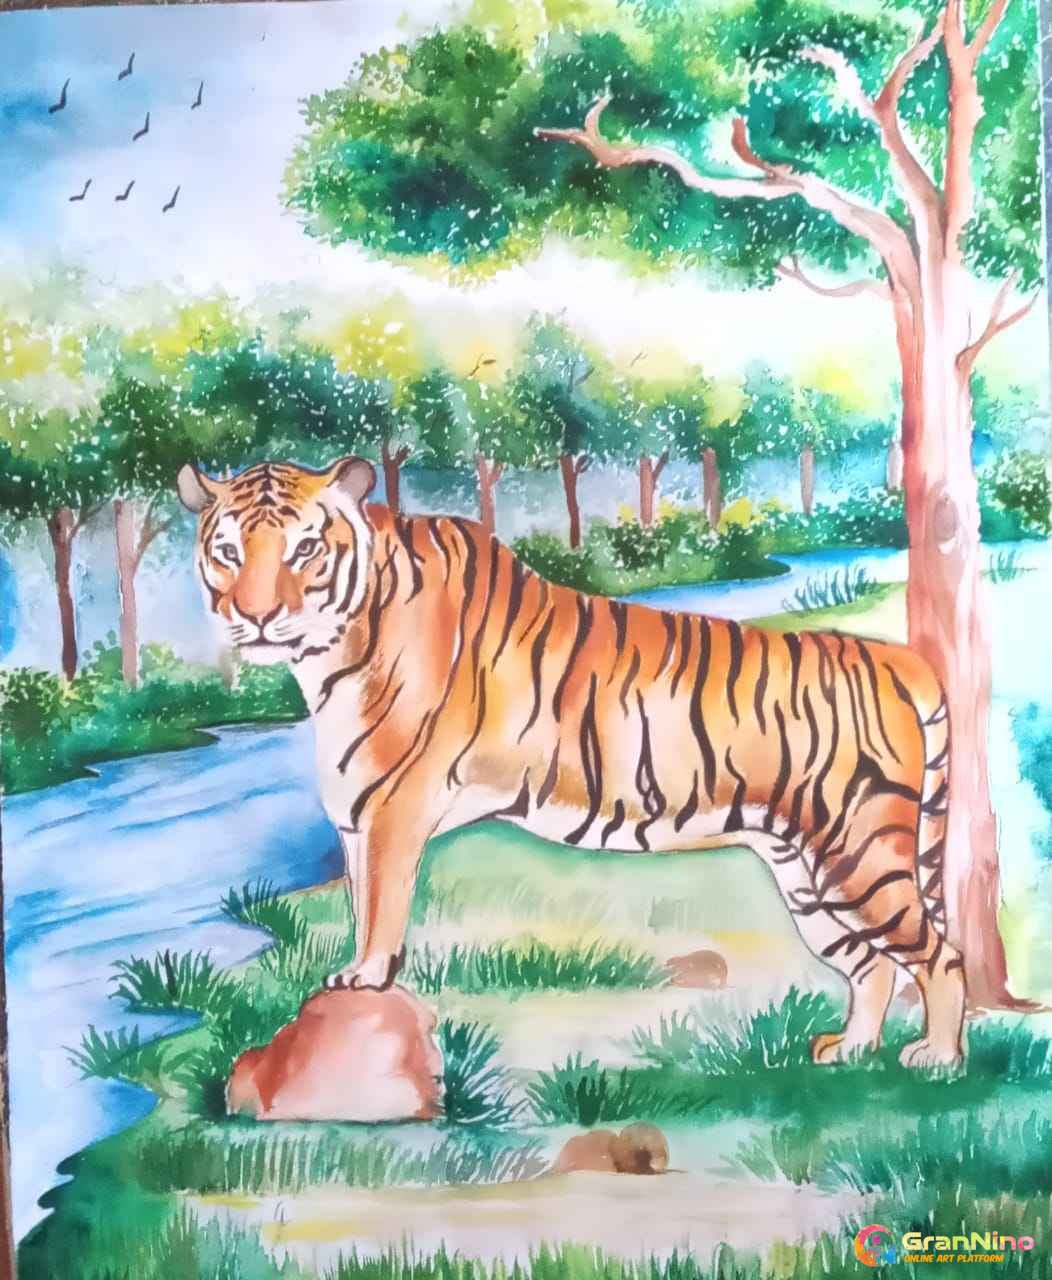 ArtStation - Siberian Tiger Colour Pencil Drawing